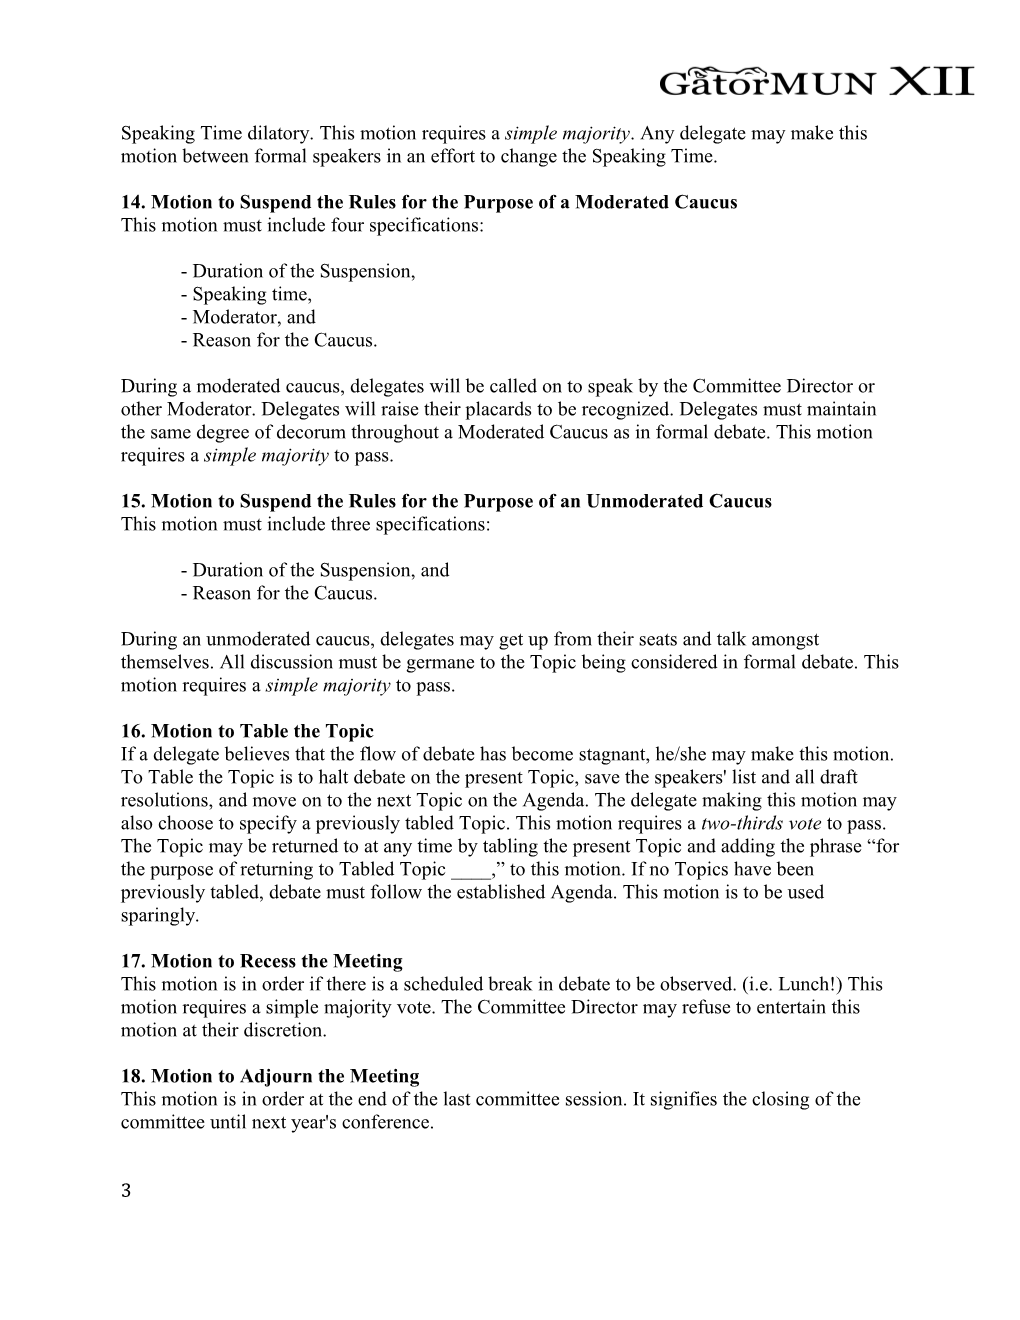 Delegate Handbook: Rules of Procedure Gatormun XI